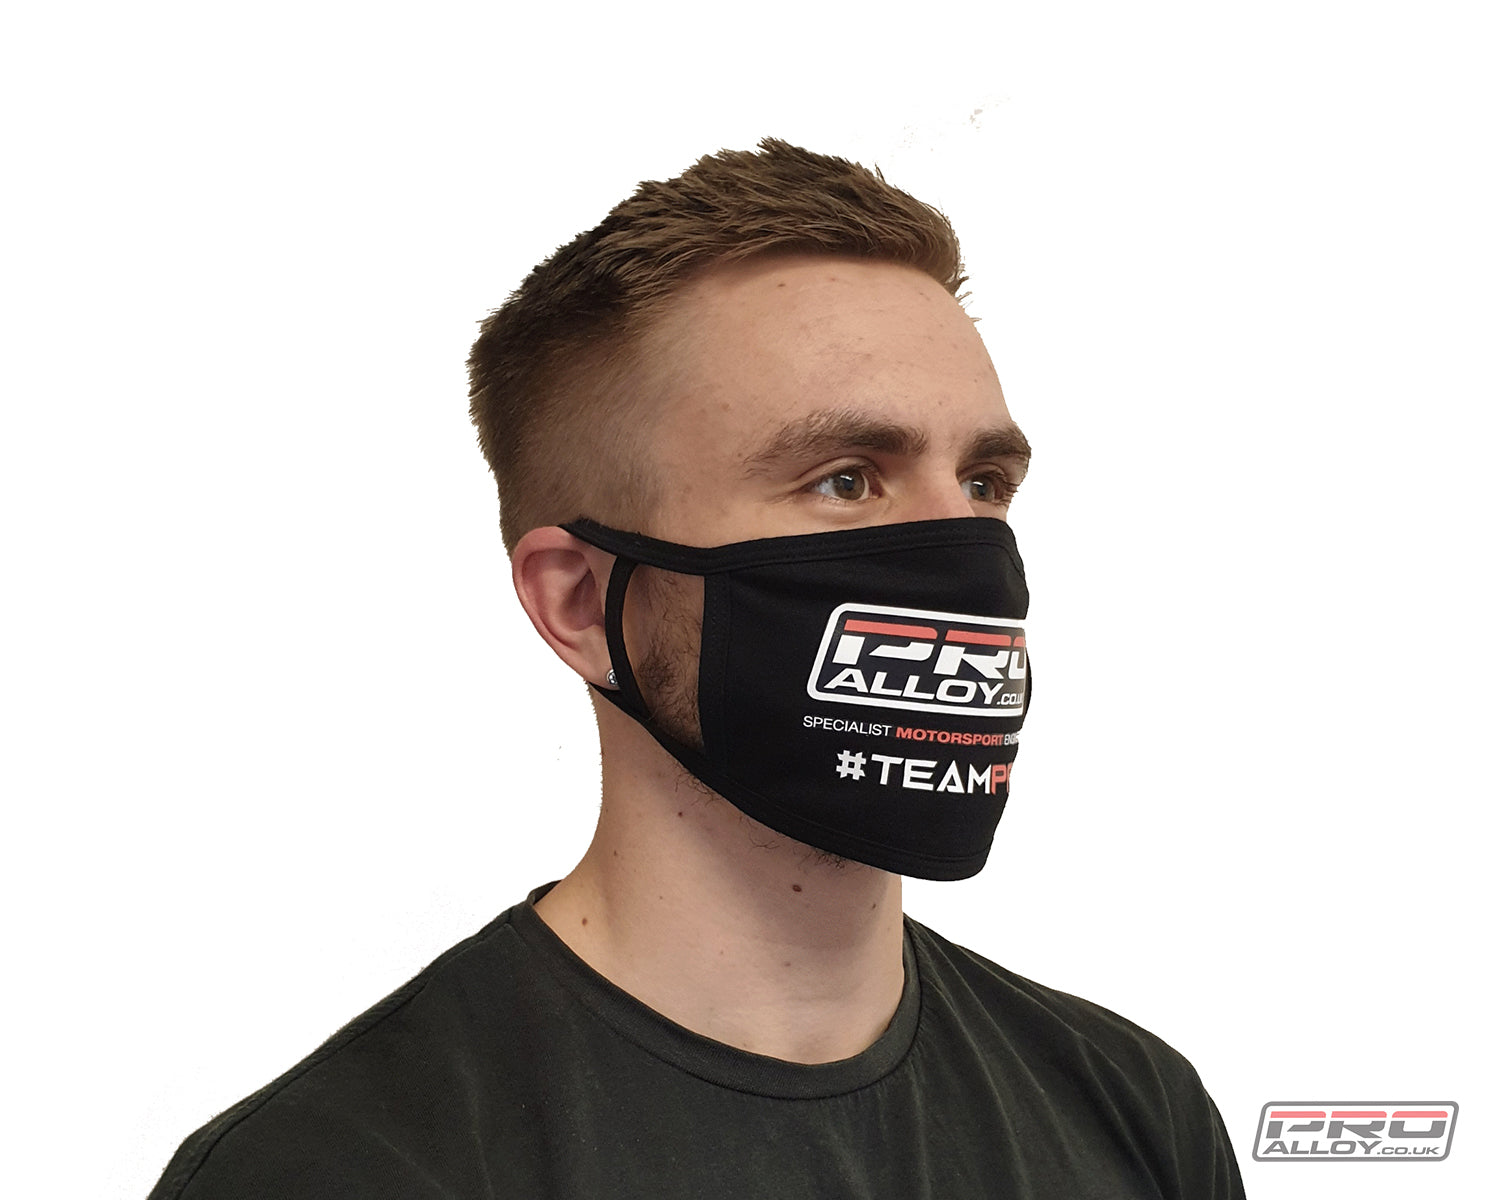 Pro Alloy Branded 'TEAMPRO' Face Mask Clothing    - Pro Alloy